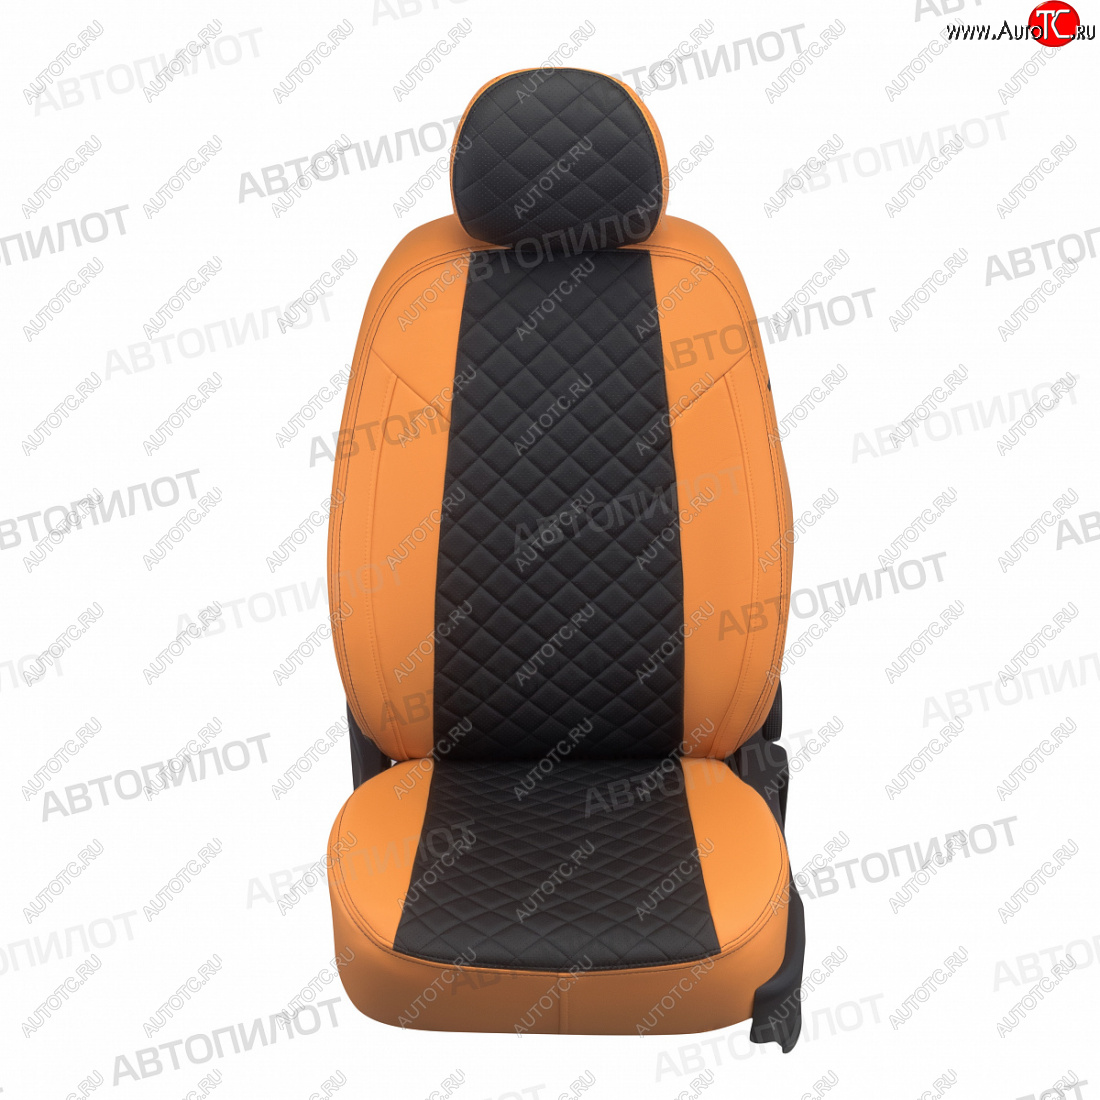 13 999 р. Чехлы сидений (экокожа) Автопилот Ромб  KIA Optima  3 TF (2010-2016) (оранж/черный)